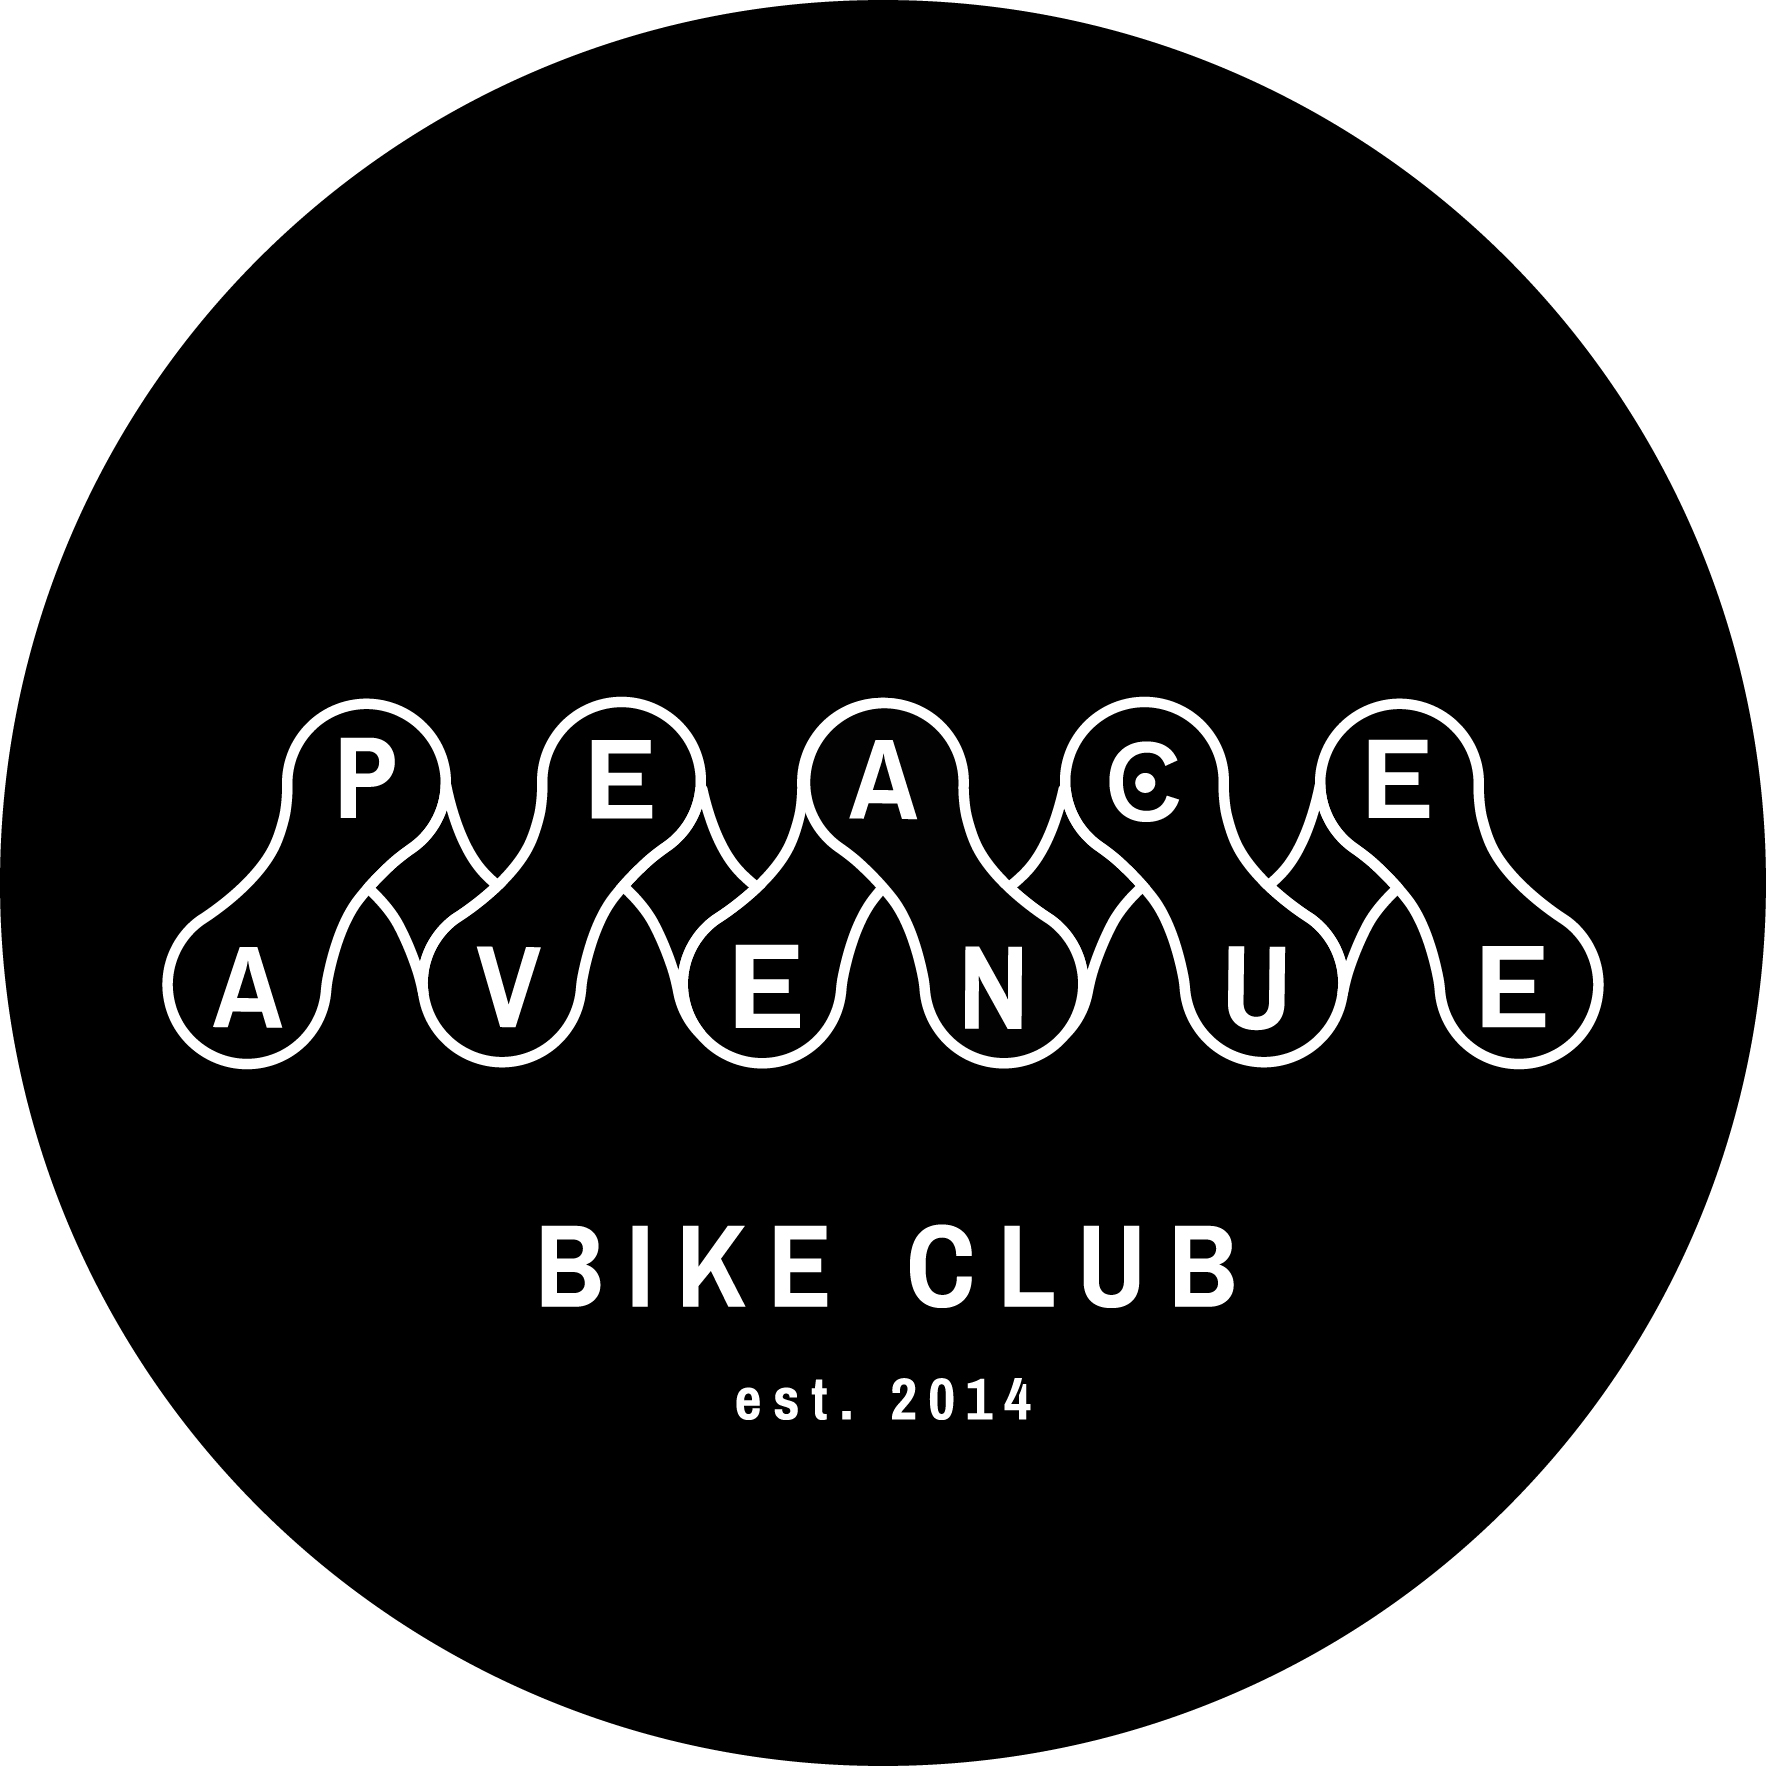 Peace Avenue Bike Club – Social biking in Edmonton, Alberta, Canada.